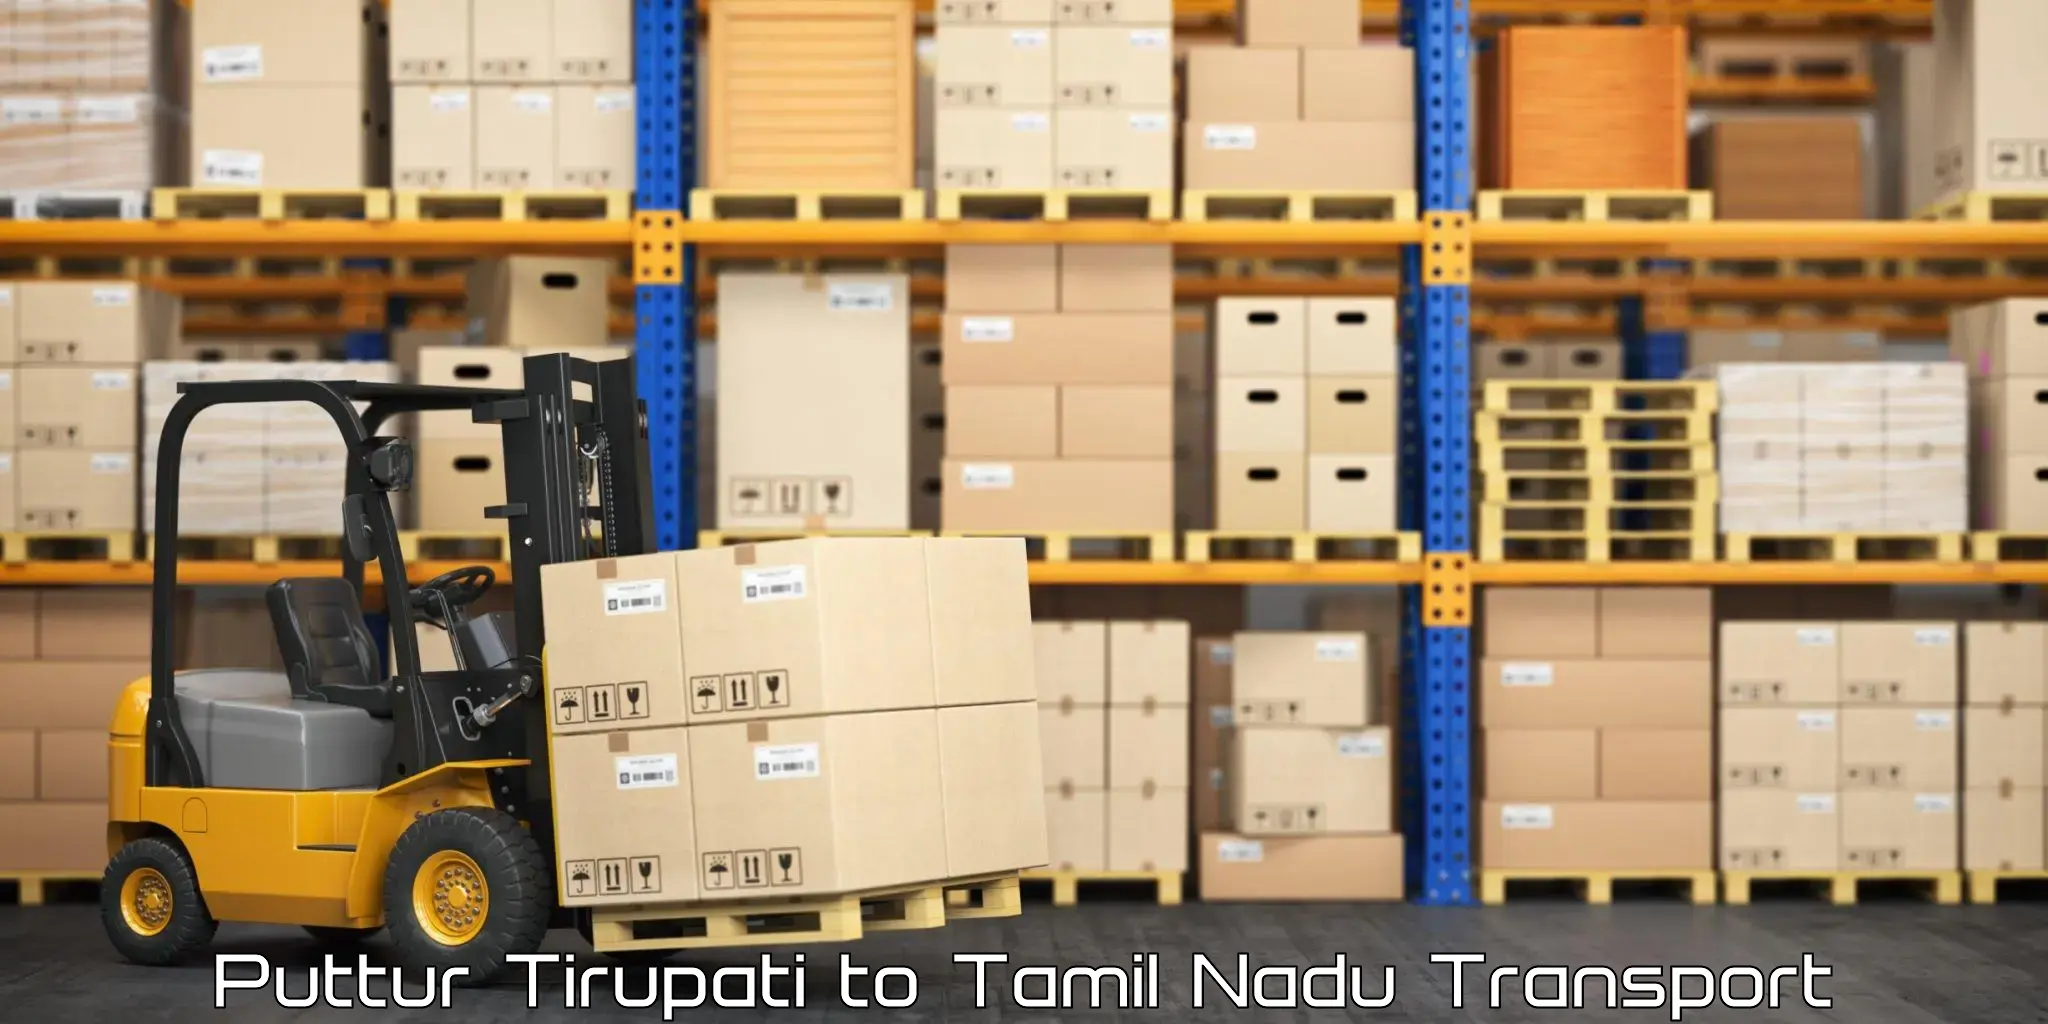 Online transport service Puttur Tirupati to Chennai Port